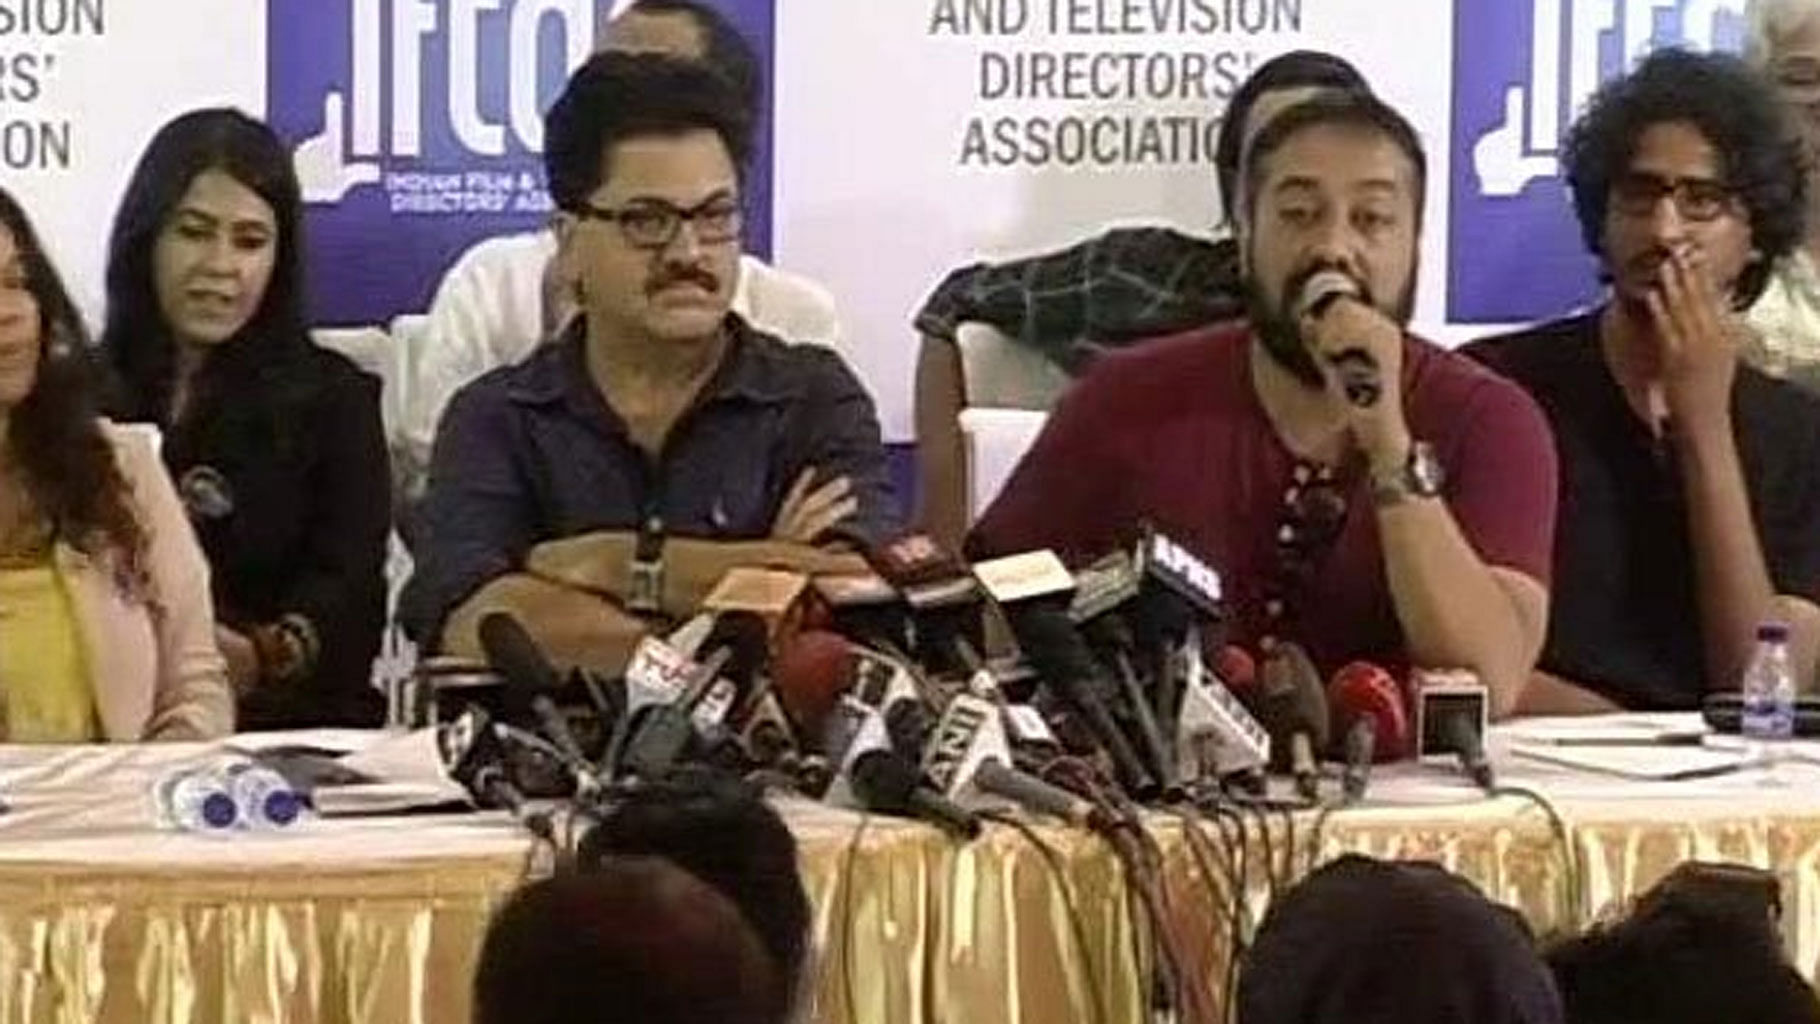 Ekta Kapoor, Ashoke Pandit, Anurag Kashyap and Abhishek Chaubey at the press conference by Film and TV Directors’ Association in Mumbai (Photo courtesy: Twitter)